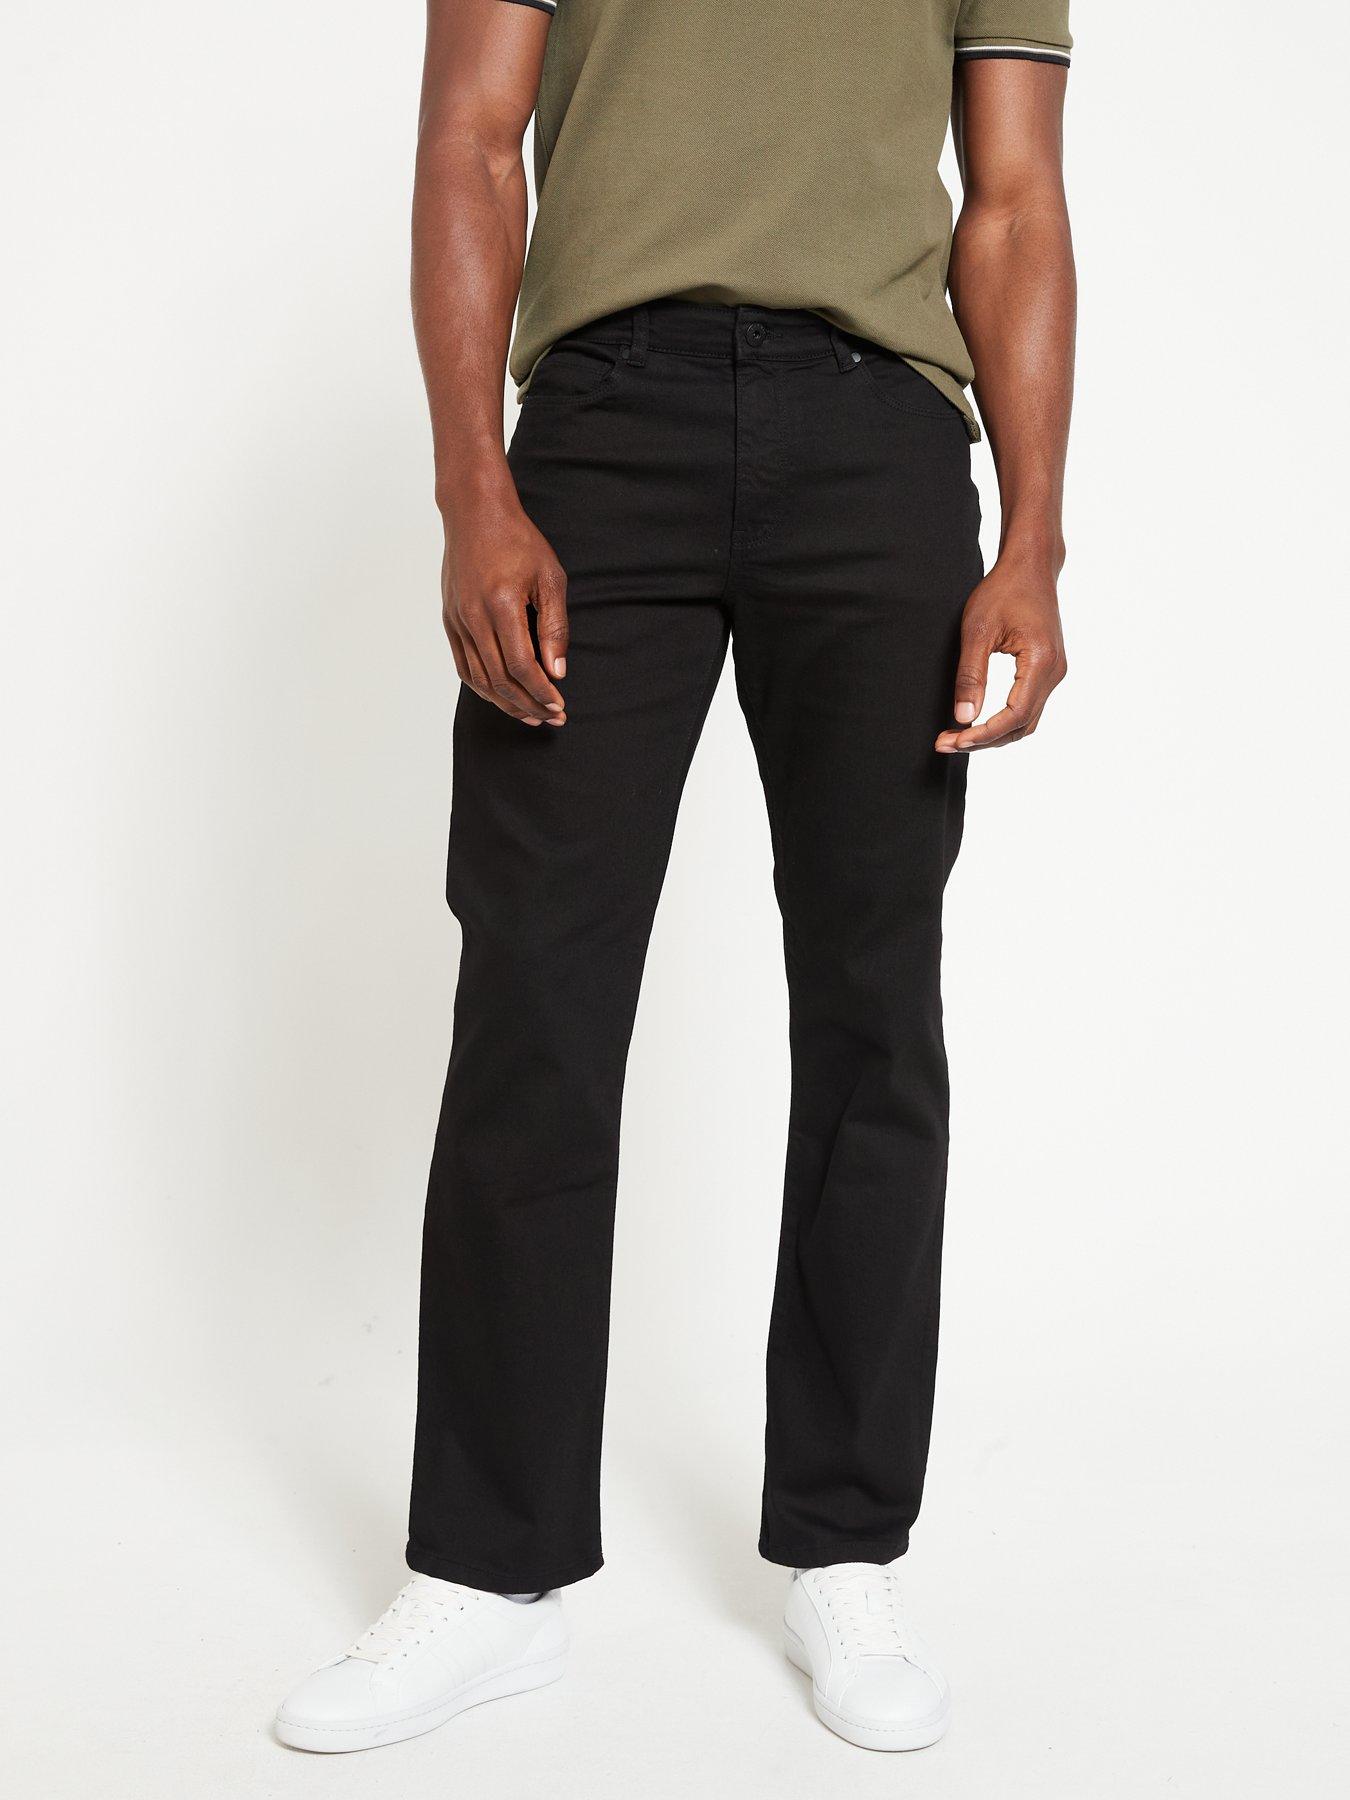 straight leg black jeans mens